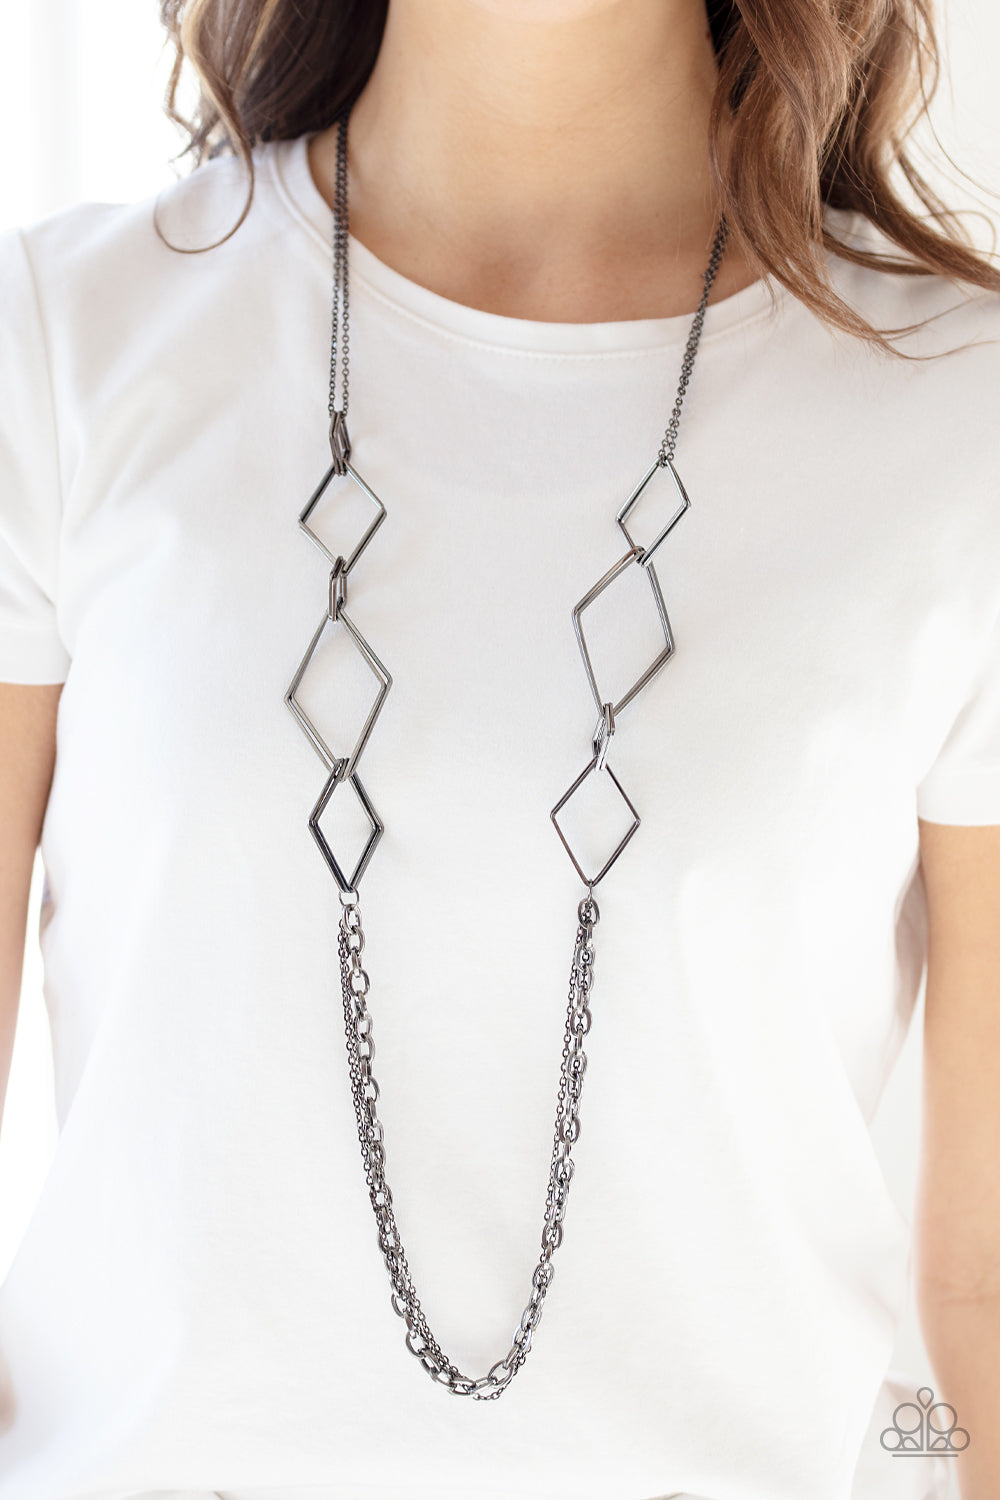 Paparazzi Accessories - Fashion Fave - Black (Gunmetal) Necklace